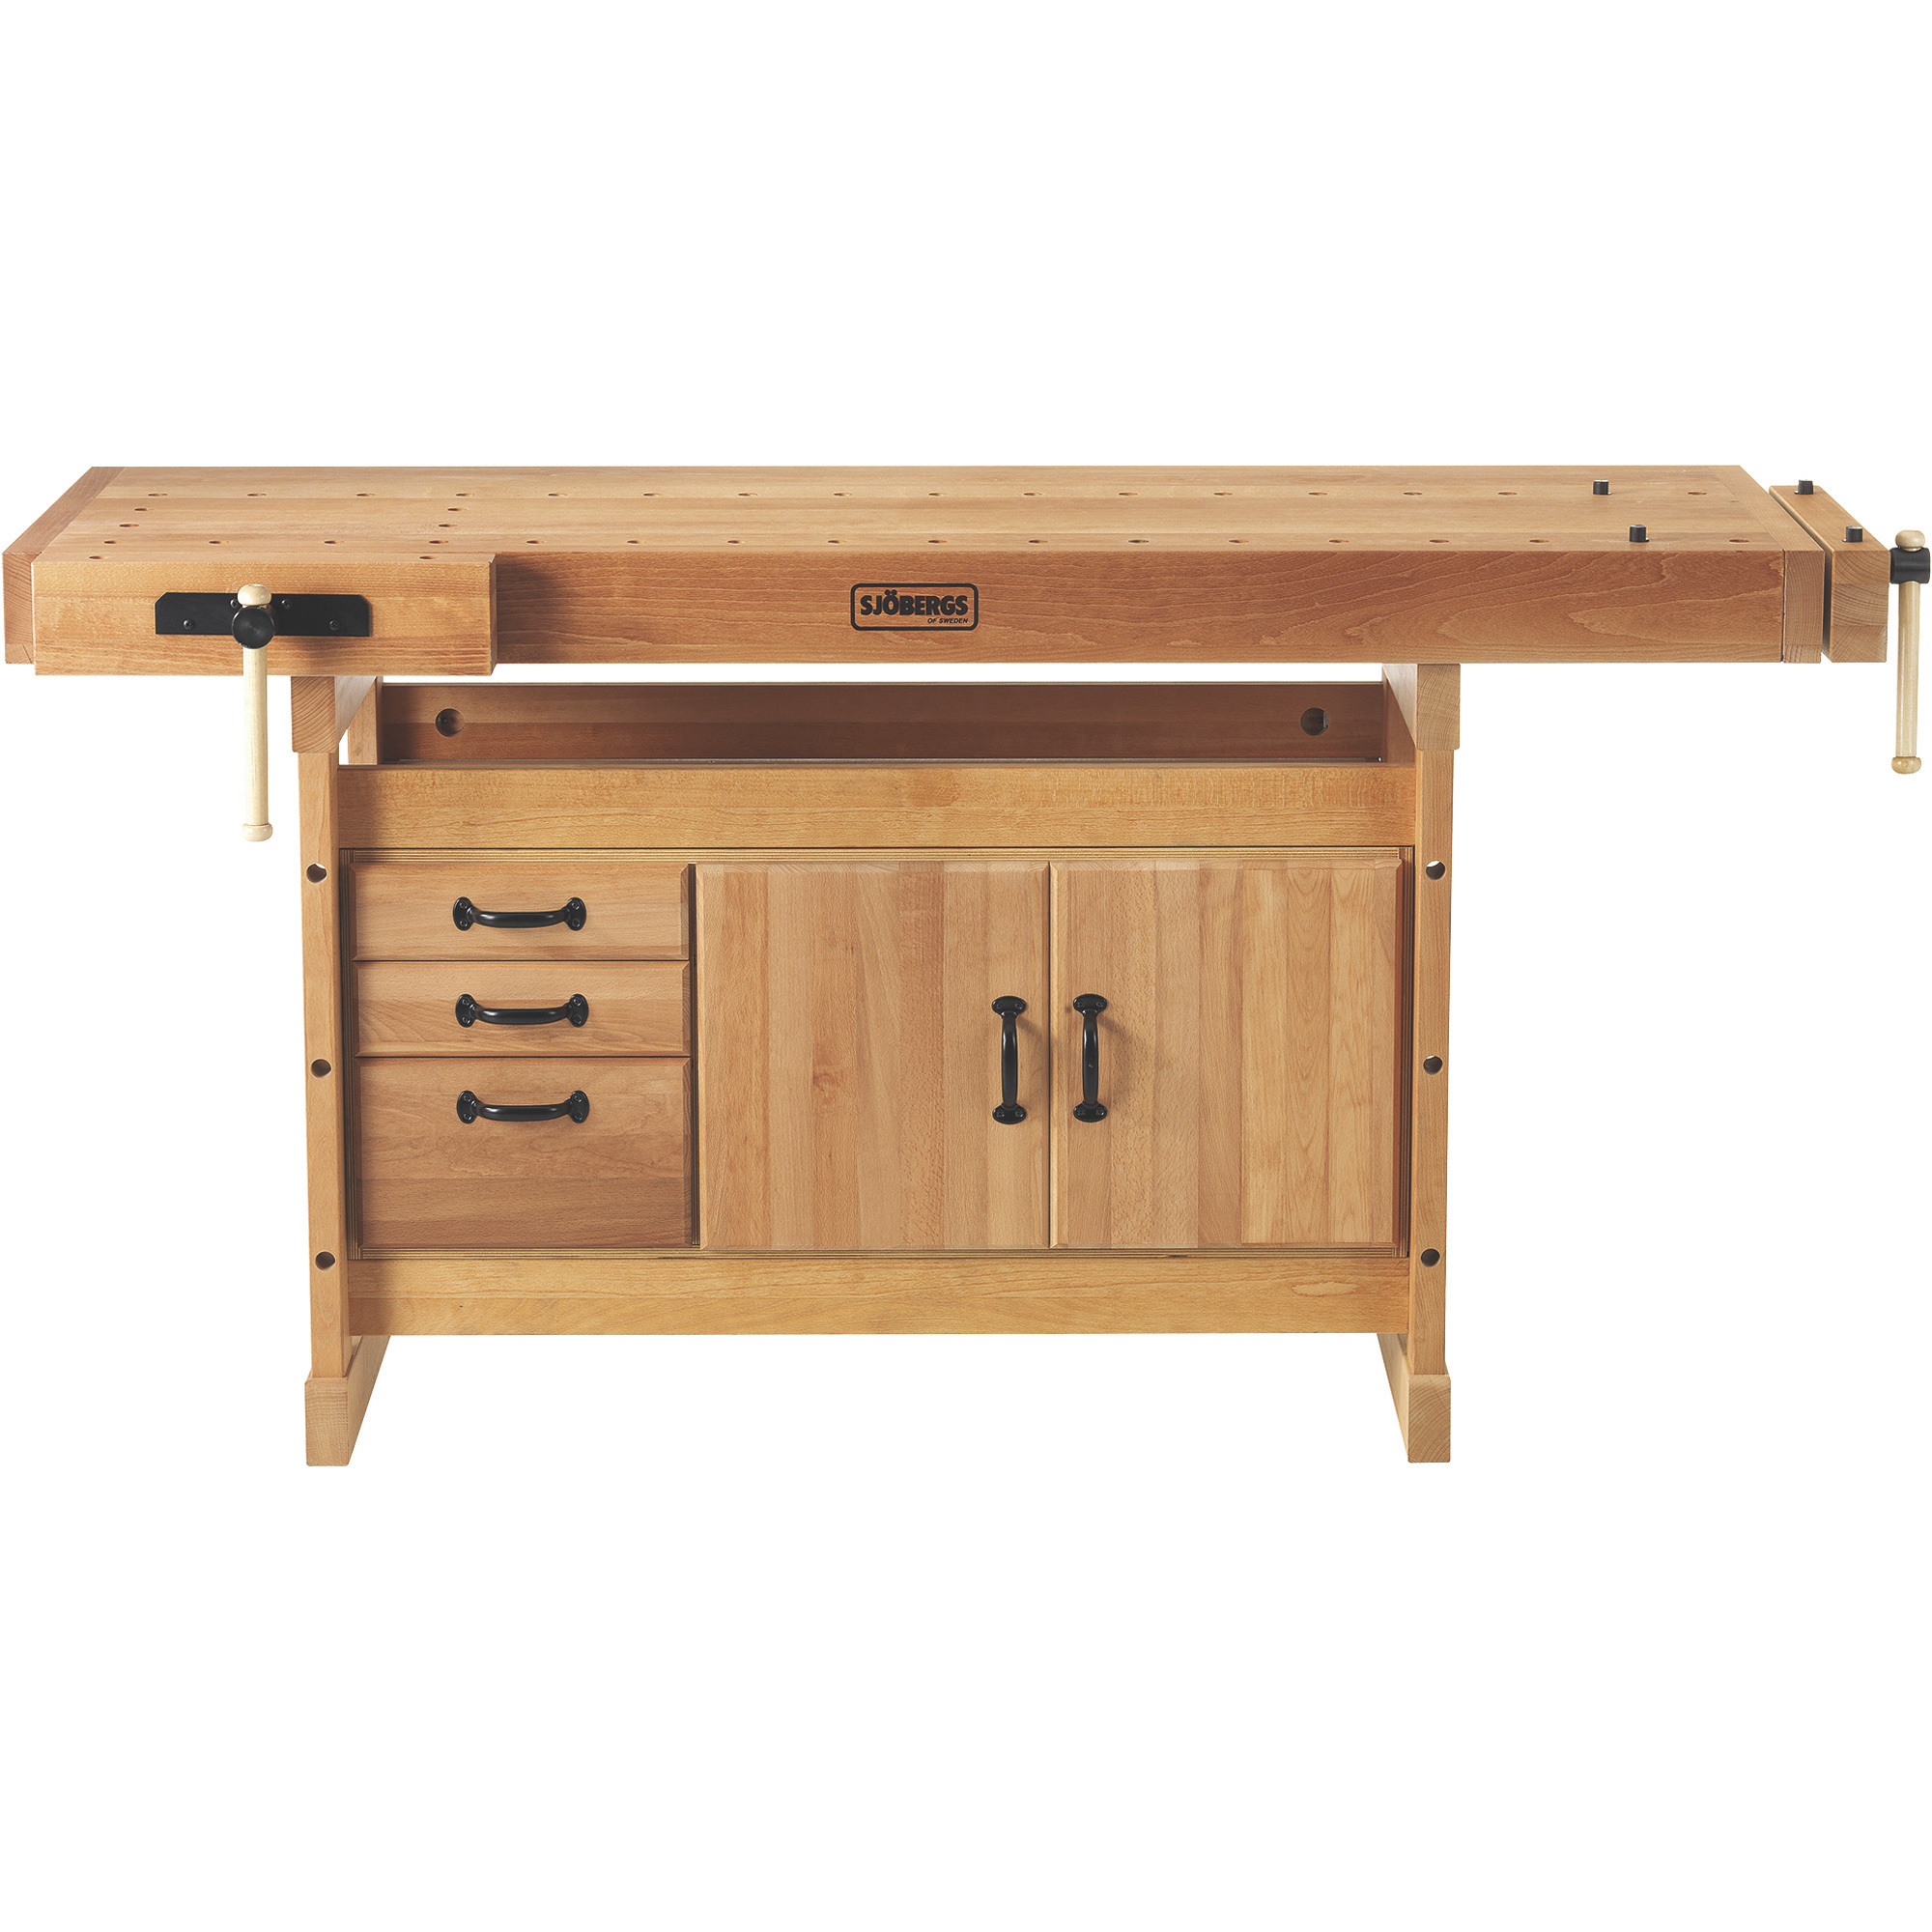 Sjobergs Scandi Plus 1425 Wood Workbench and Cabinet 57 7/8inW 814000013232  | eBay